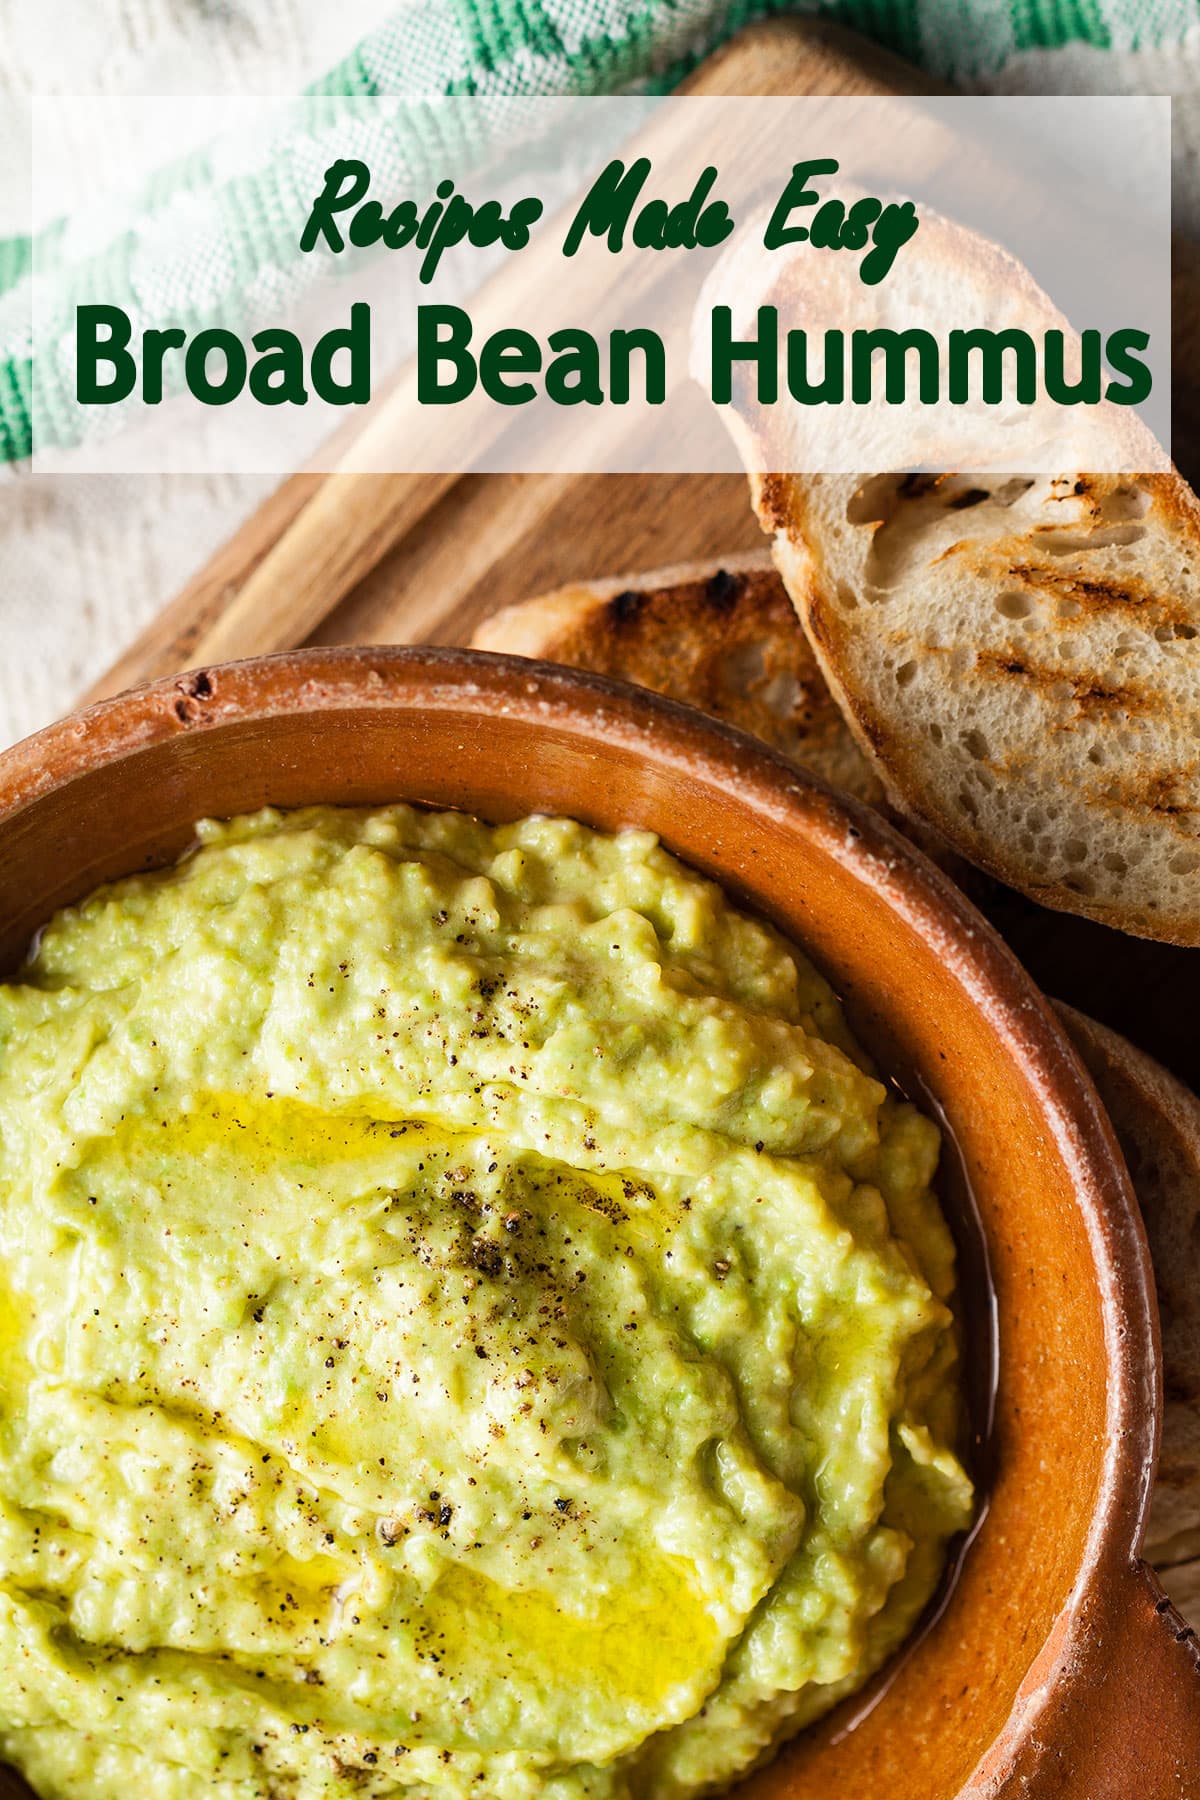 Broad bean hummus | Recipes Made Easy